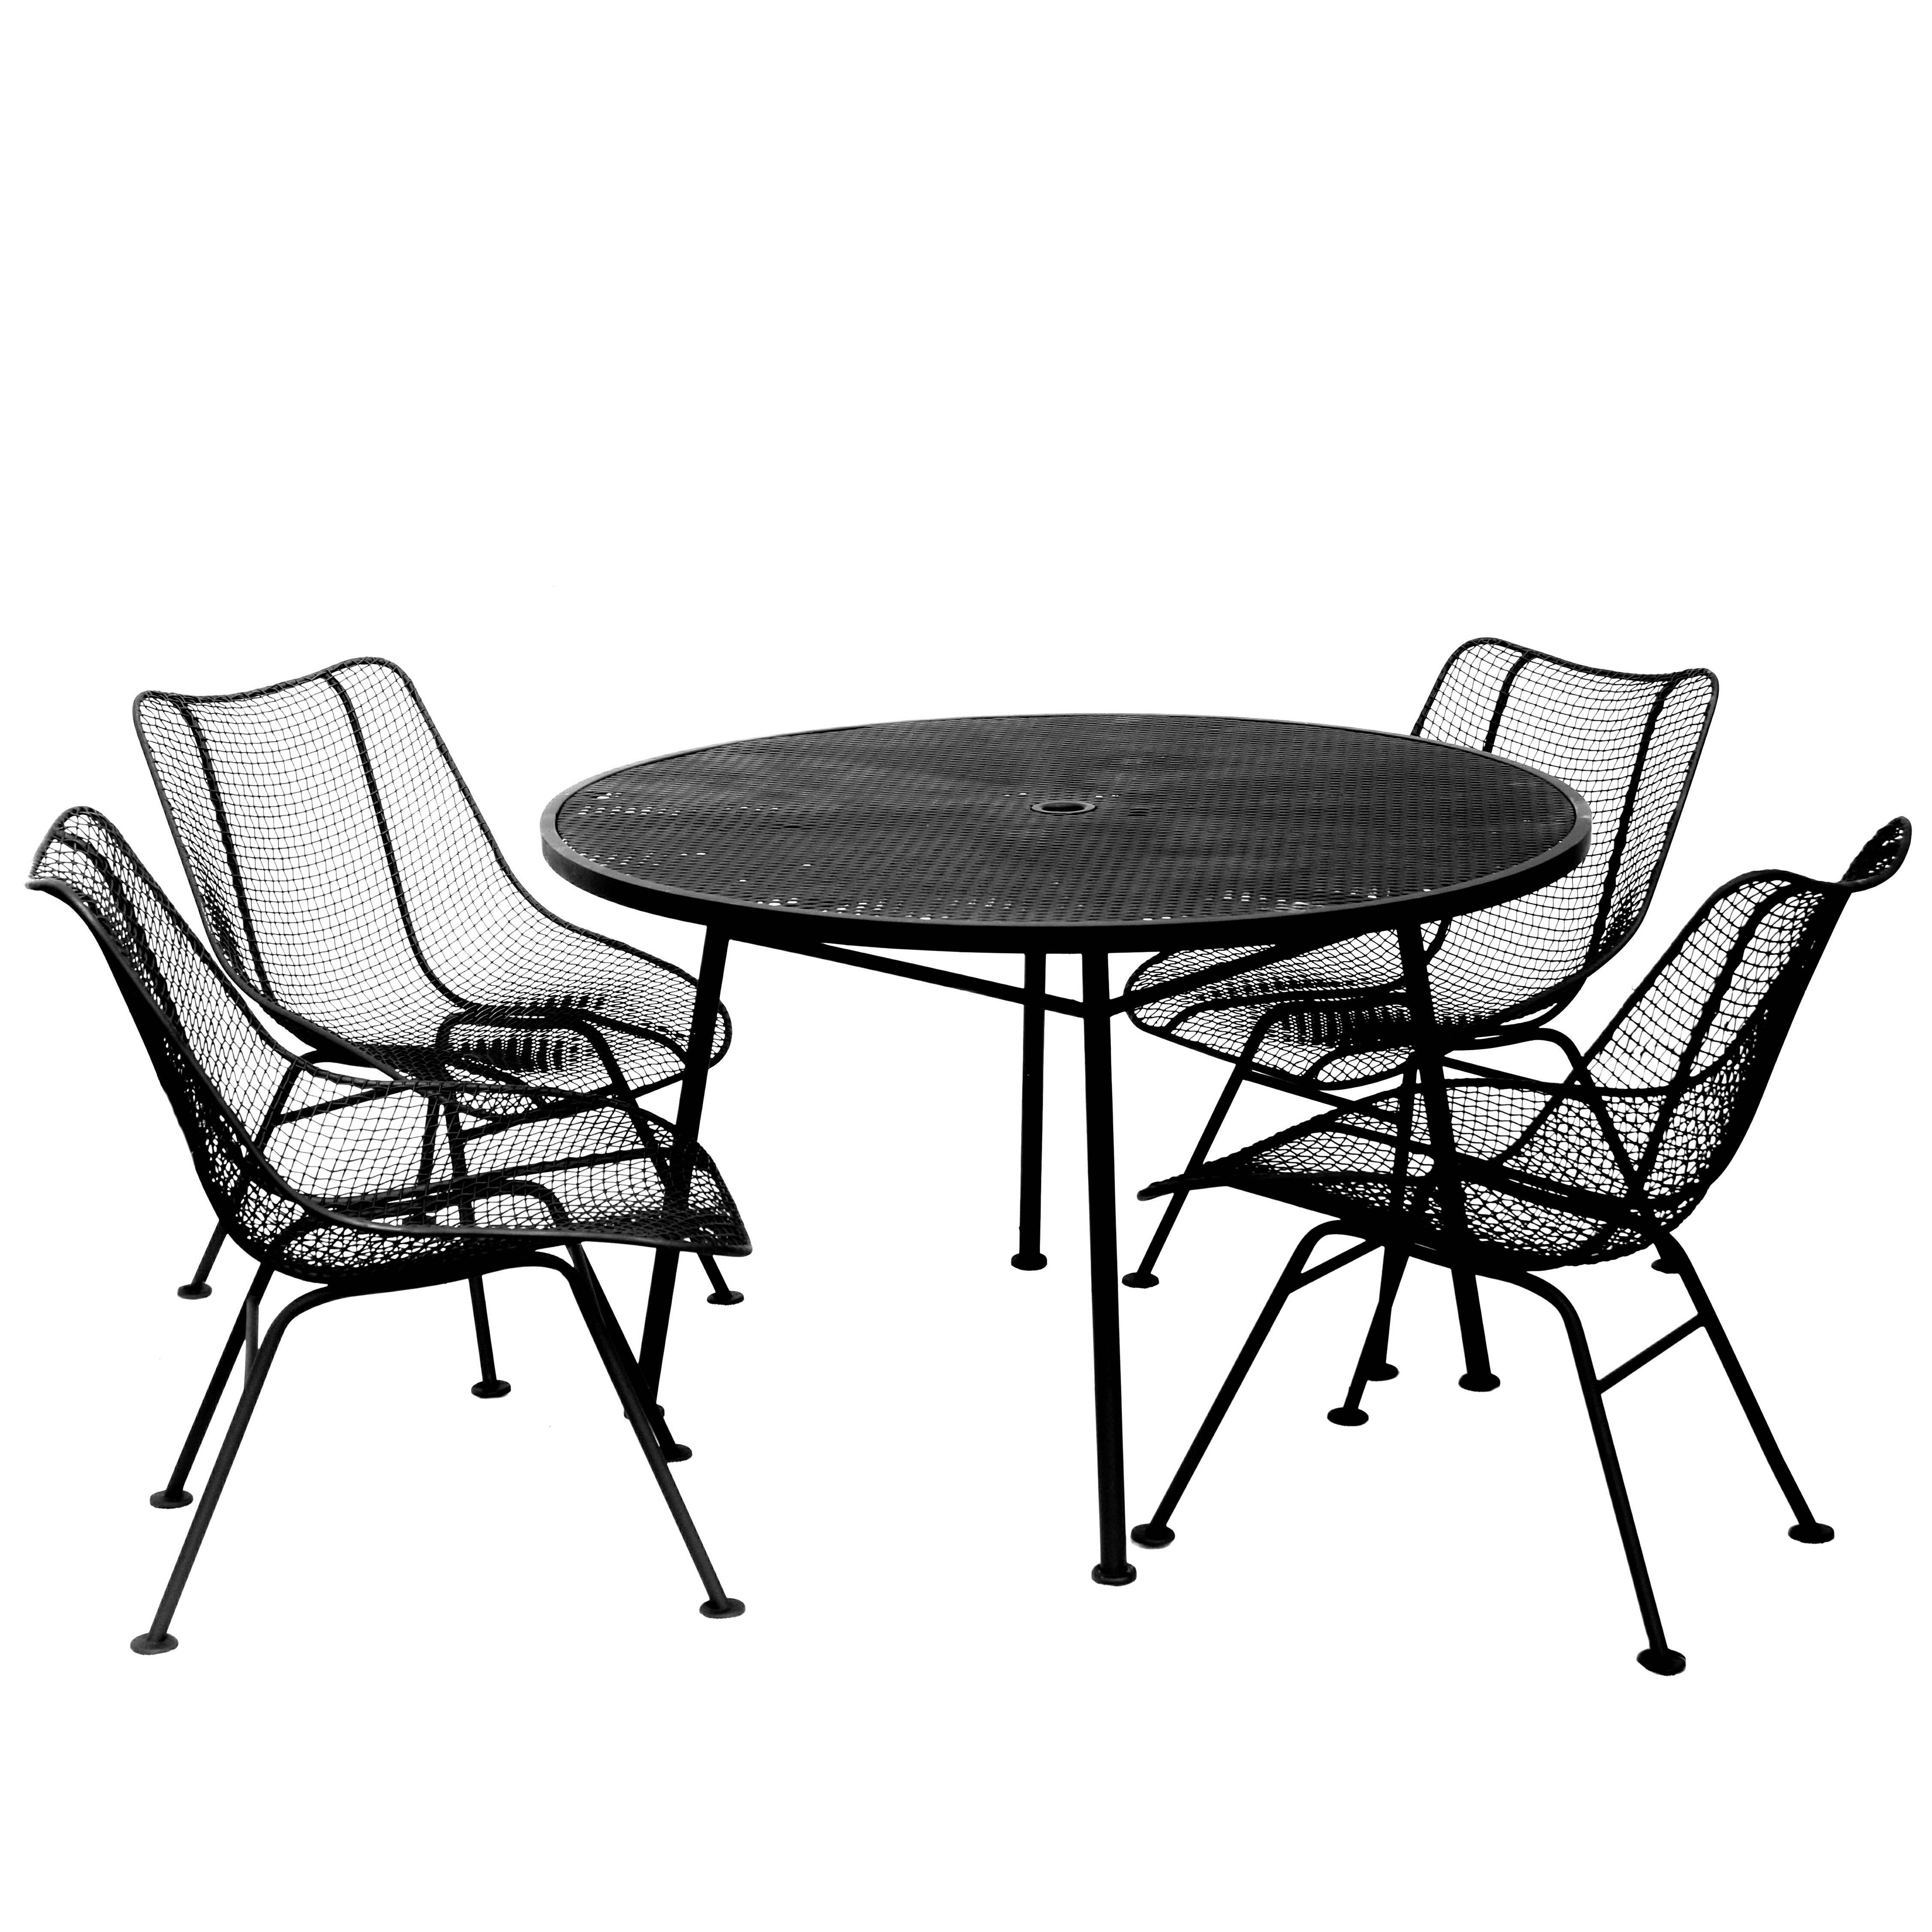 Russell Woodard Sculptura Outdoor Indoor Patio Dining Set Table Chairs